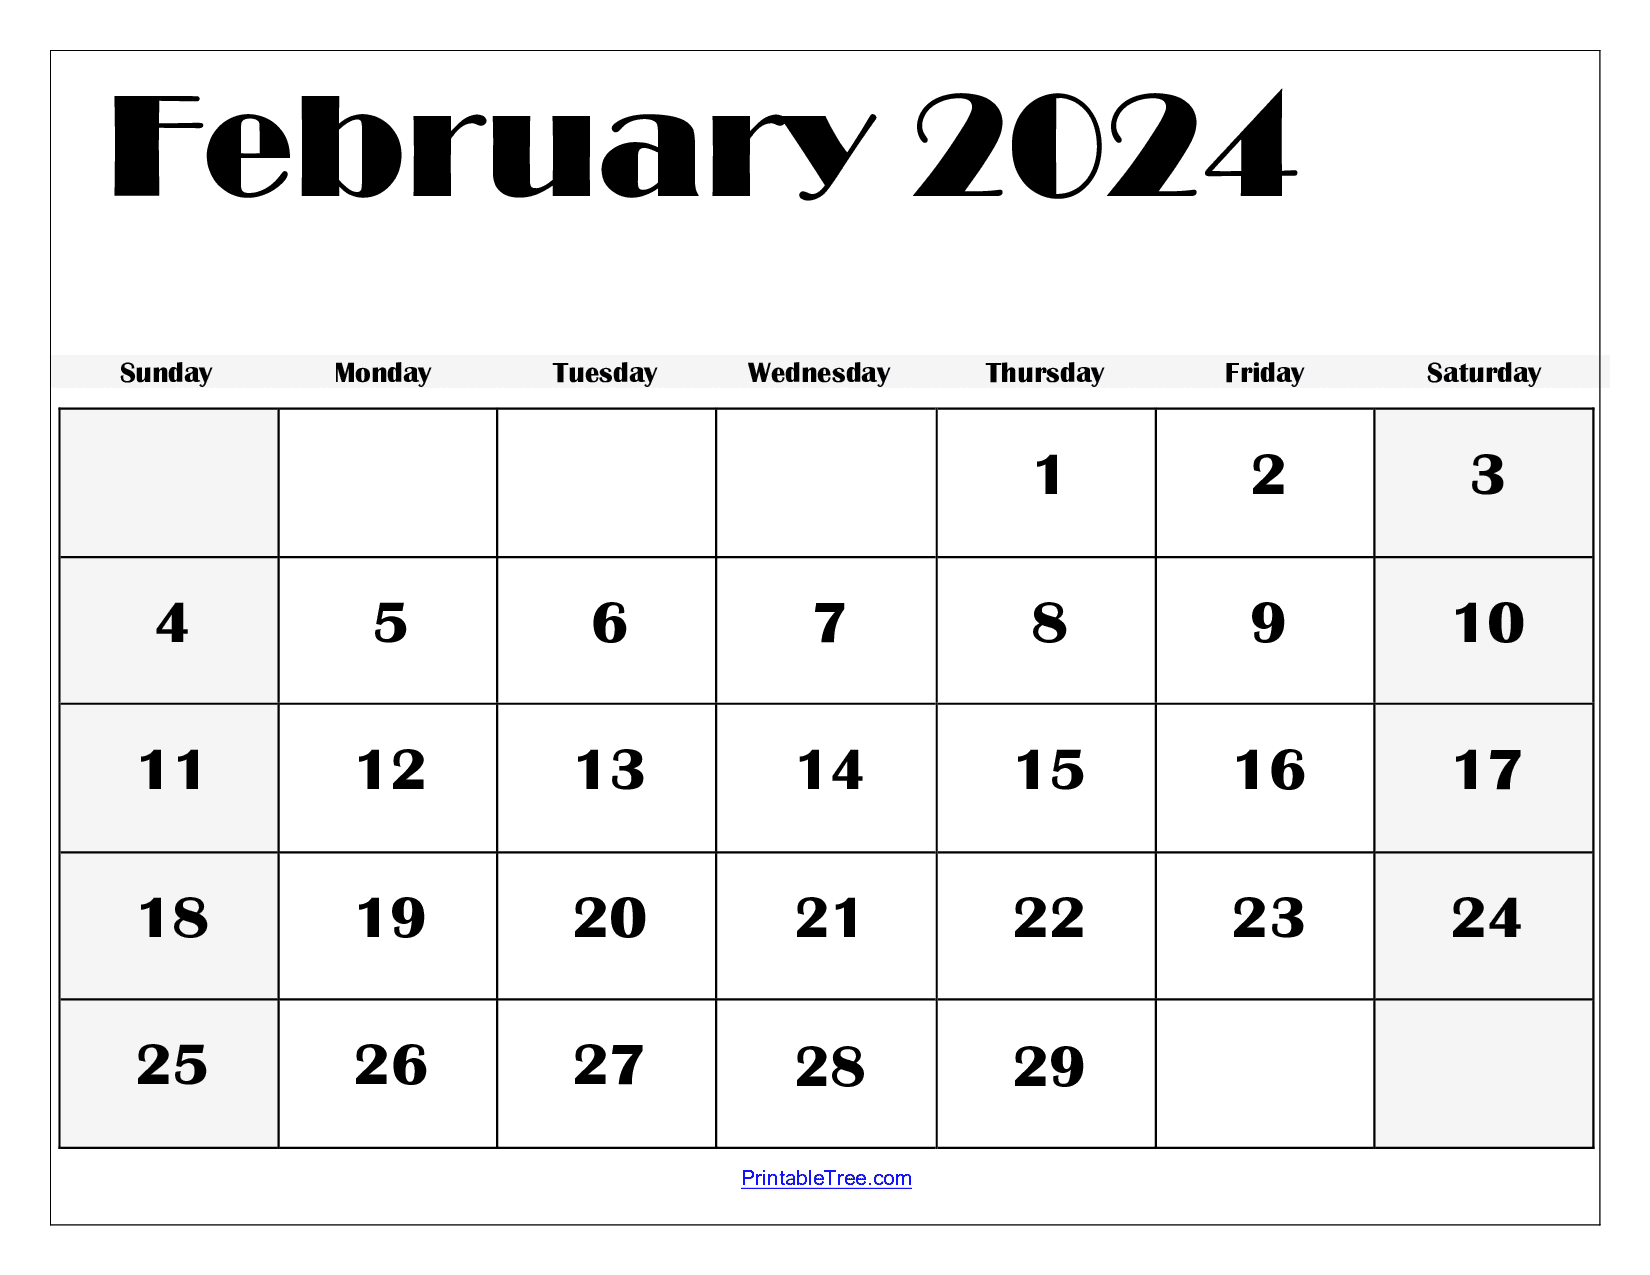 February 2024 Calendar Printable Pdf Template With Holidays for Free Printable 2024 Calendar February